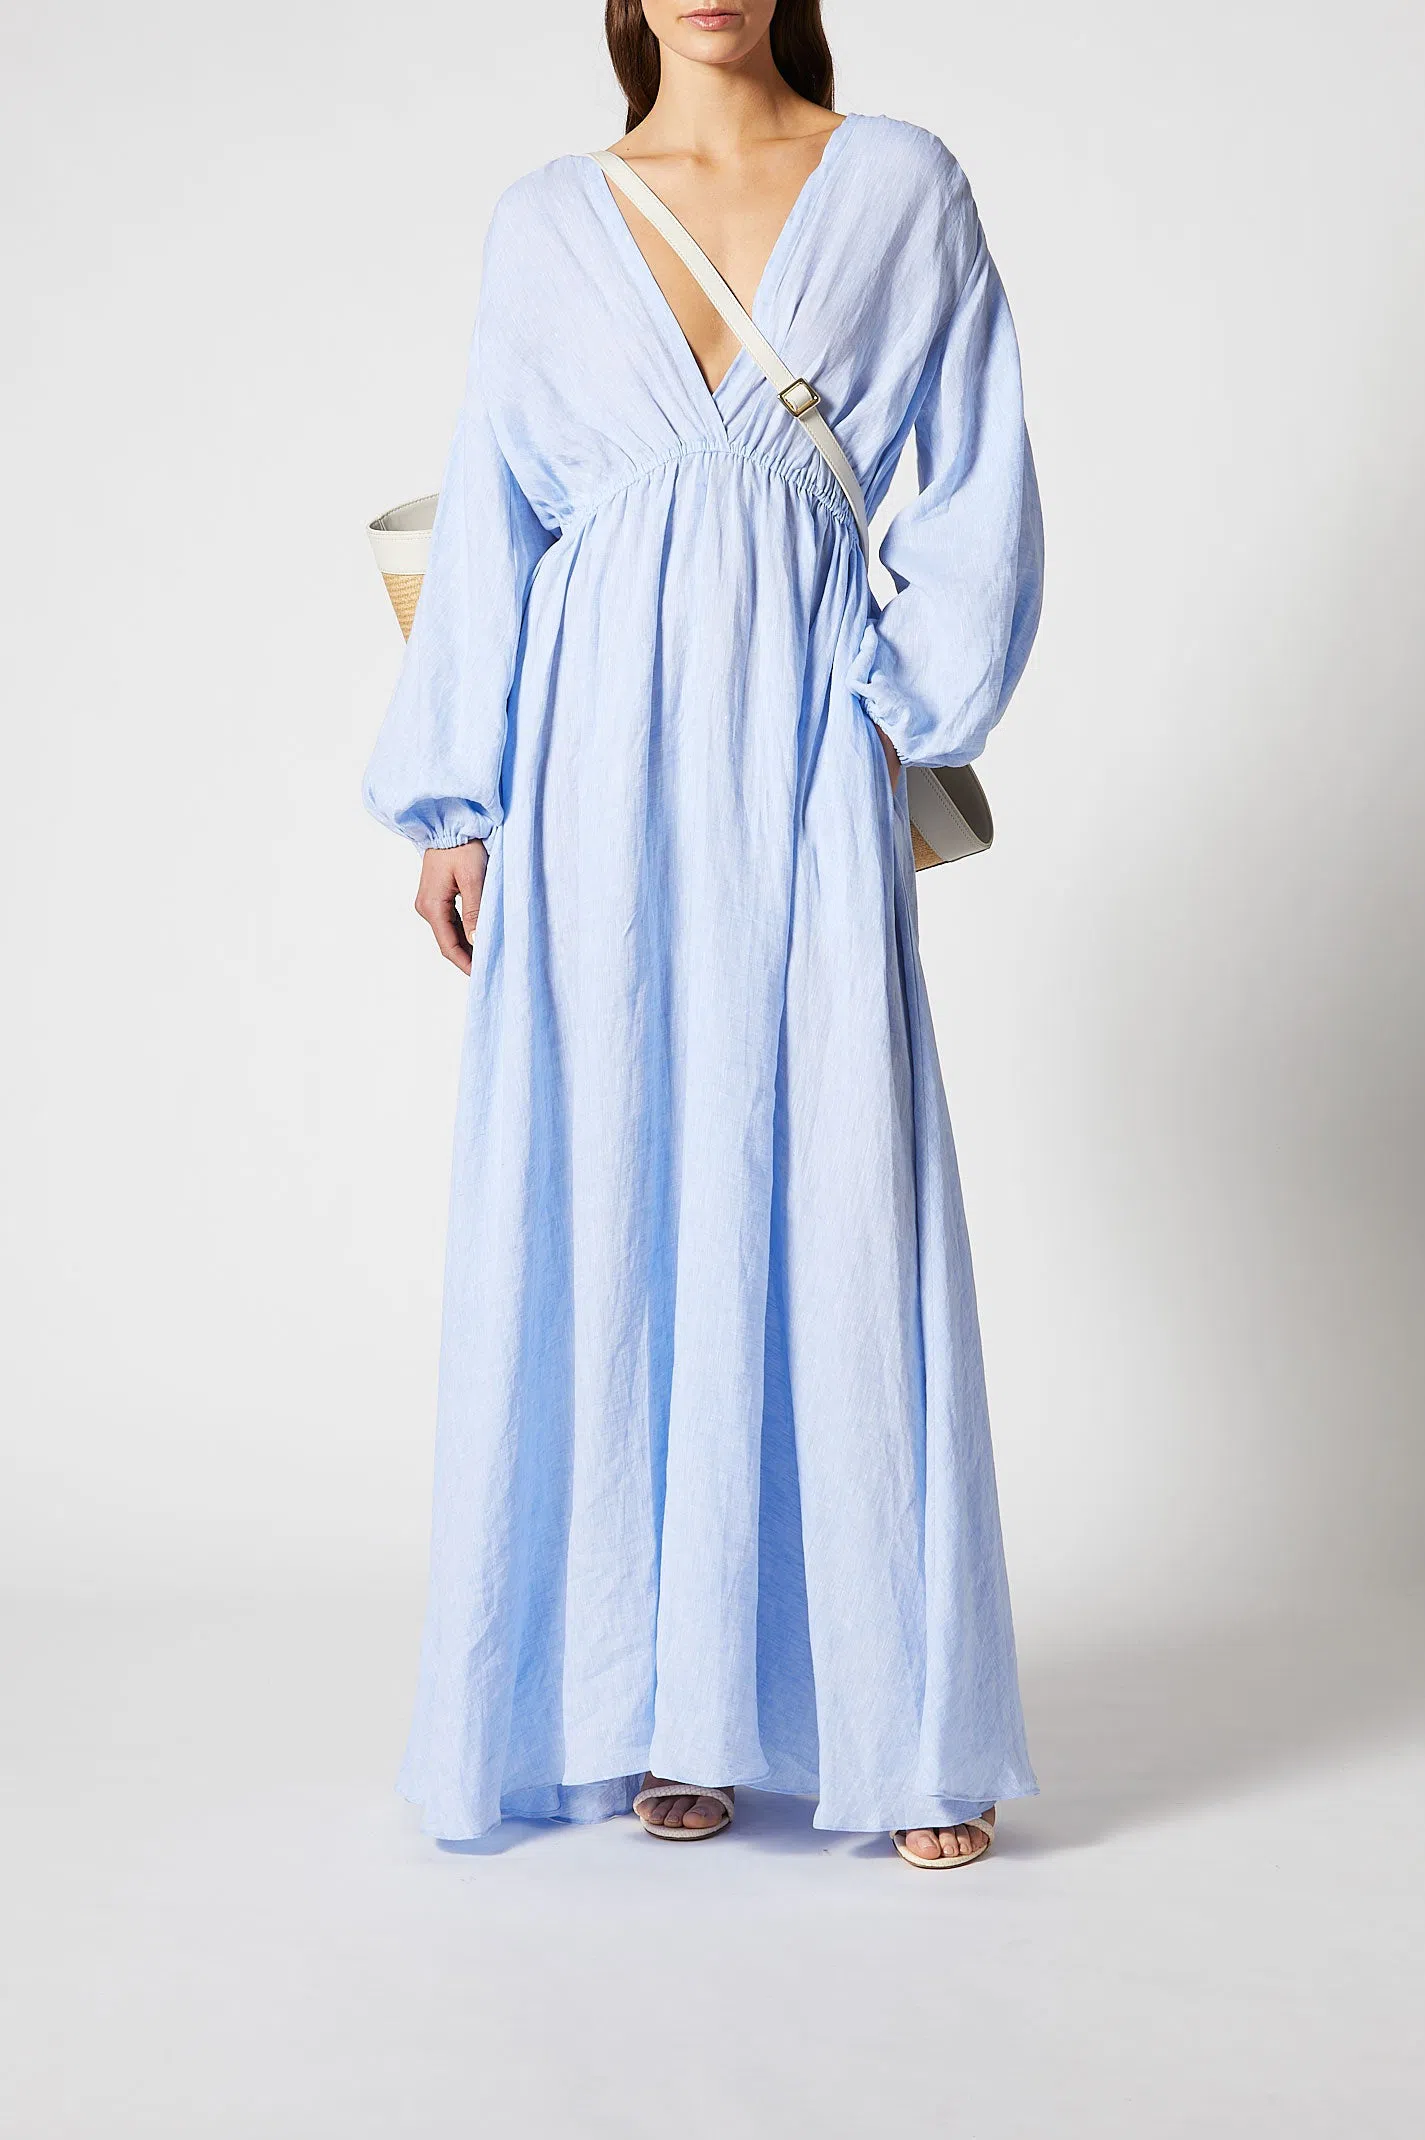 Scanlan Theodore Italian Linen V Neck Dress Blue Size 6